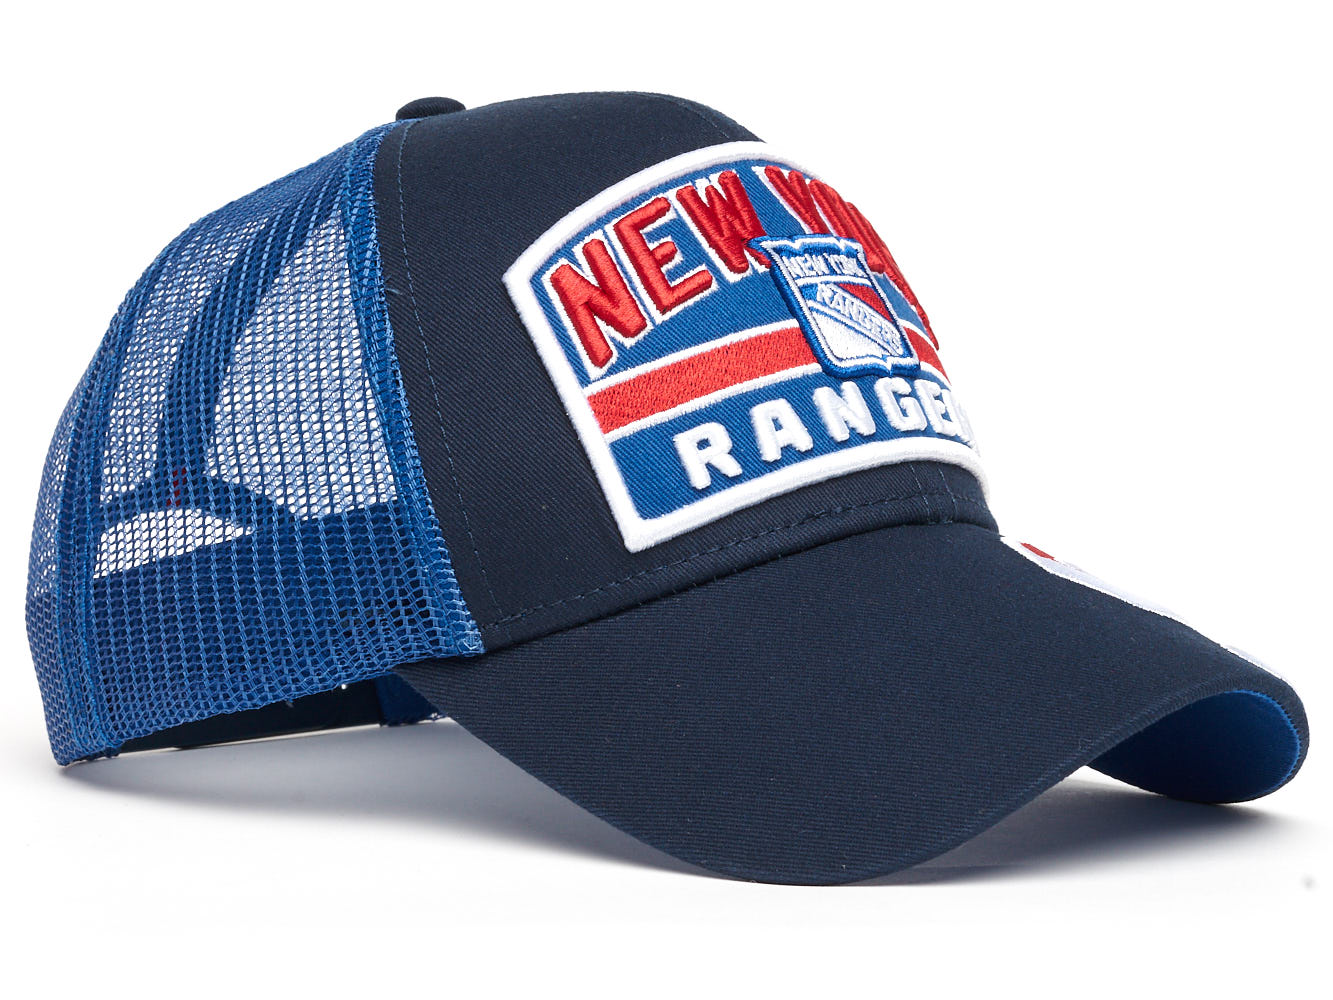  Atributika & club NHL New York Rangers 93 31338 SR